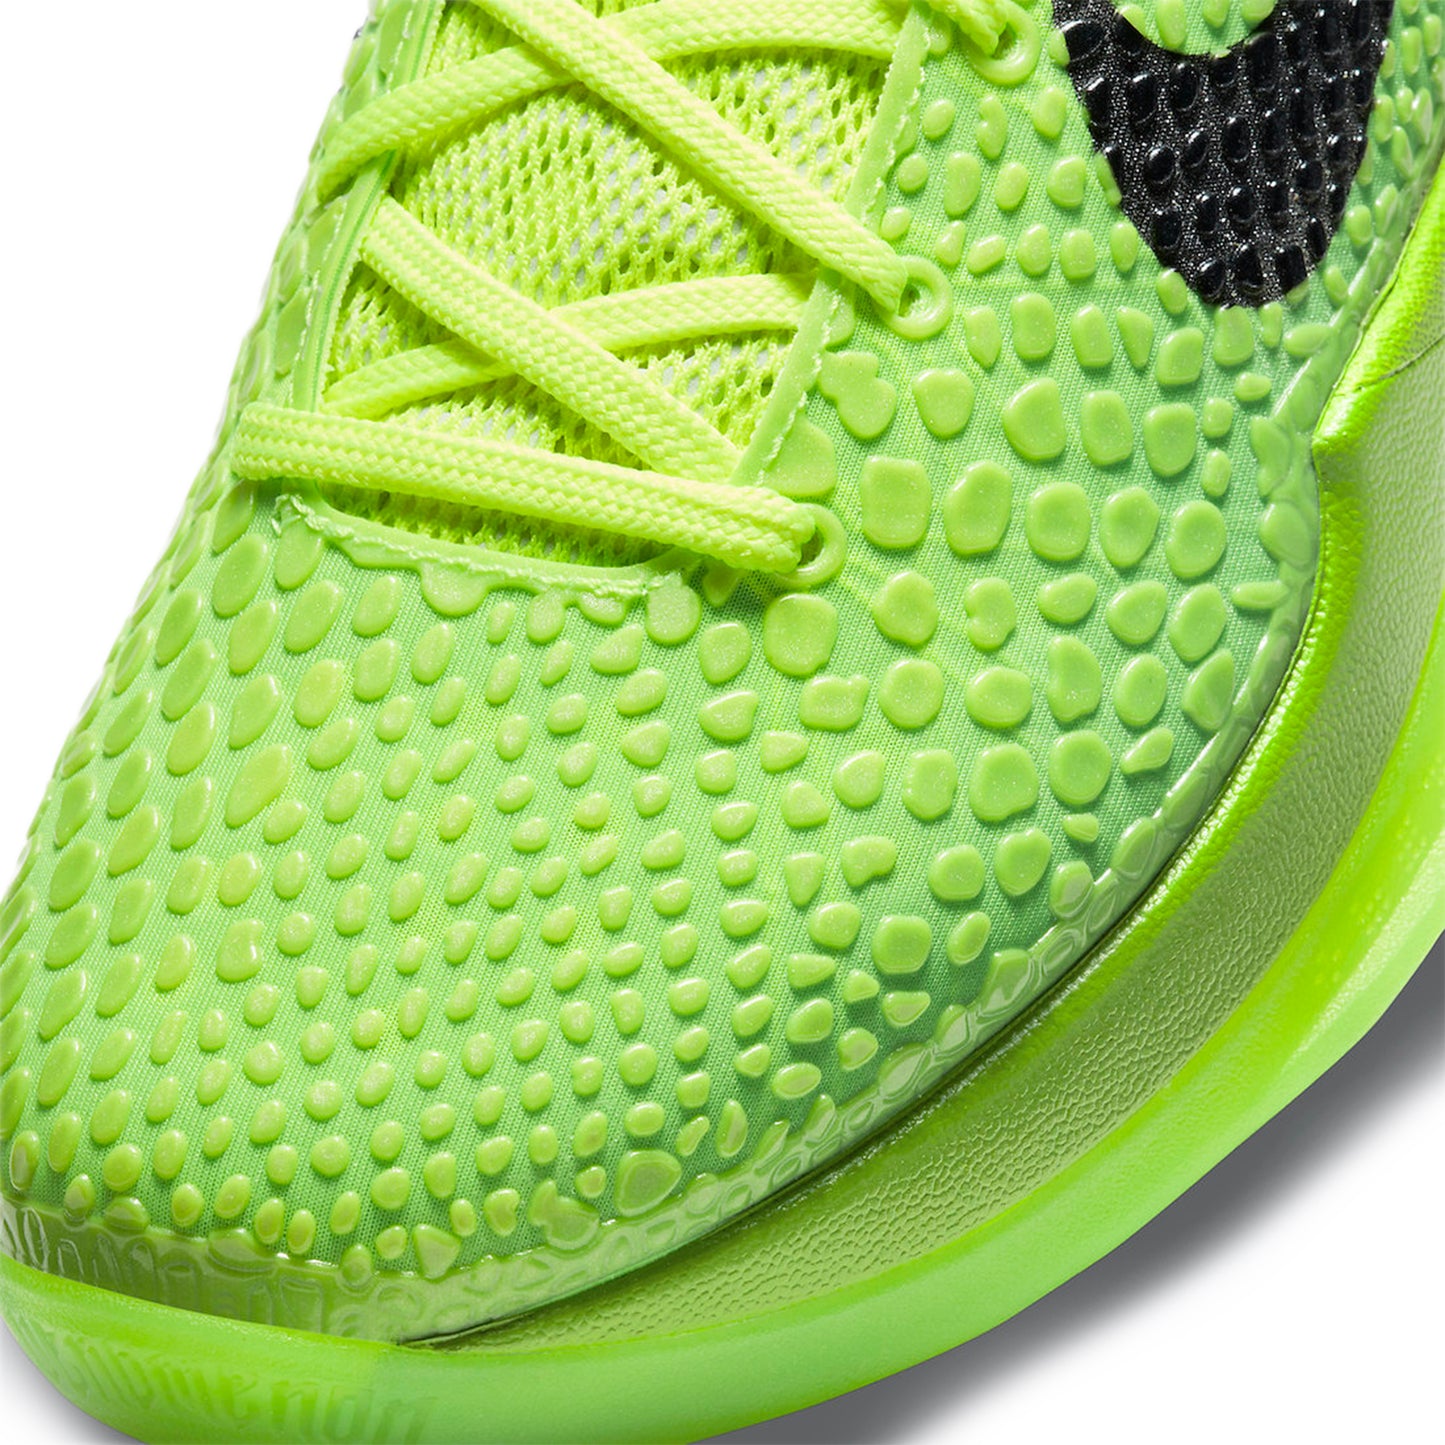 Nike Kobe 6 Protro Grinch